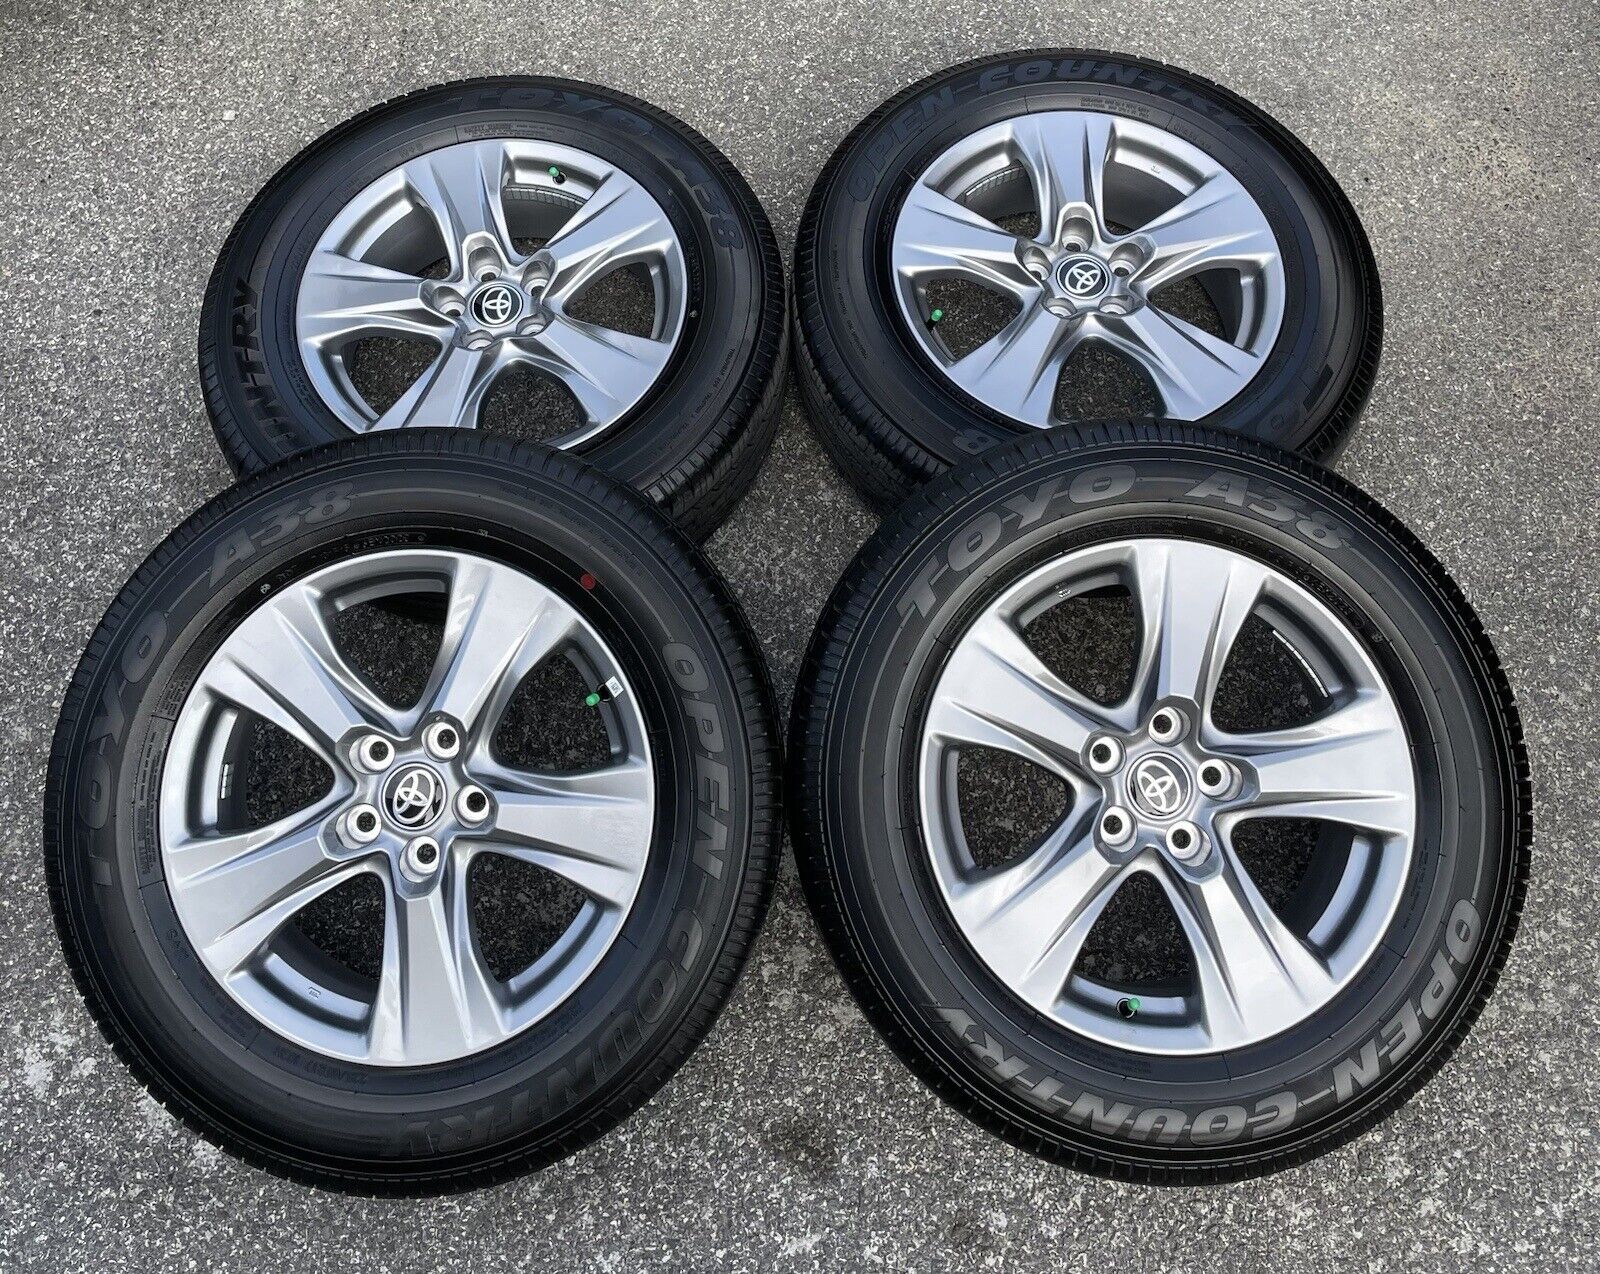 New 2023 Toyota Rav4 CHR Sienna 17” Wheels Rims Tires 225/65/17 OEM Gray 2022